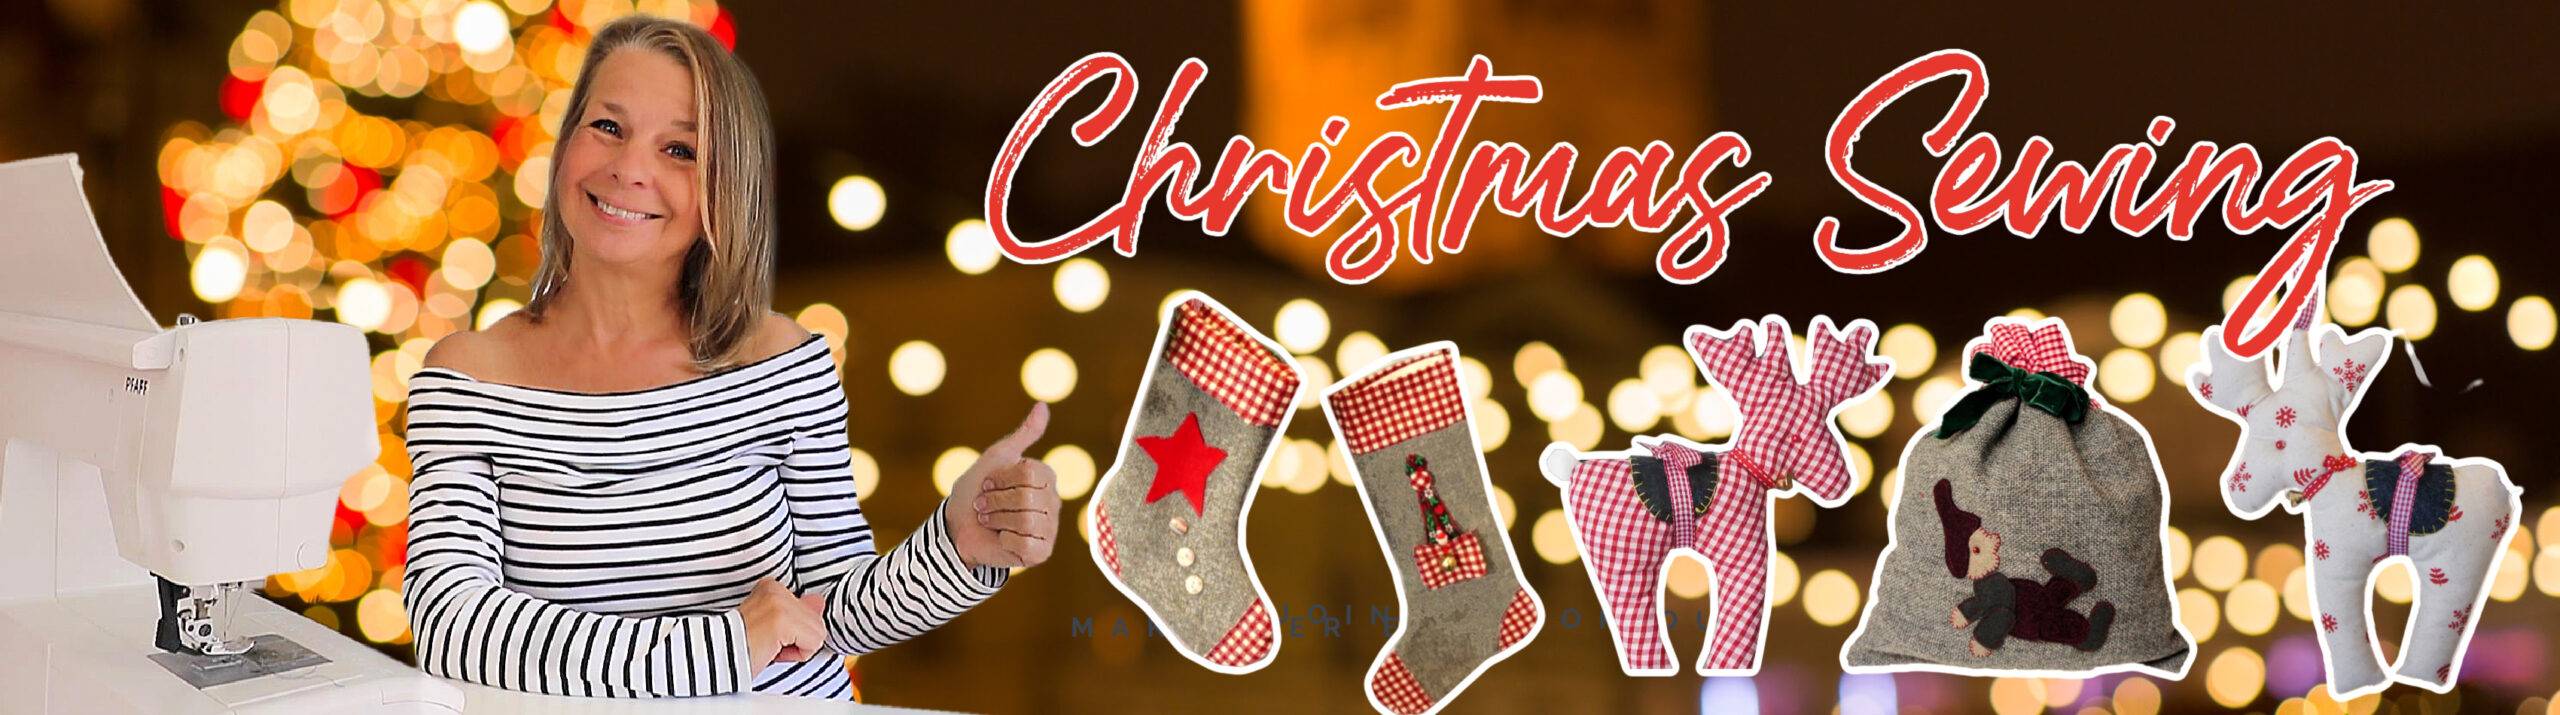 Christmas Banner, frocks and frolics, sewing, stocking, diy,